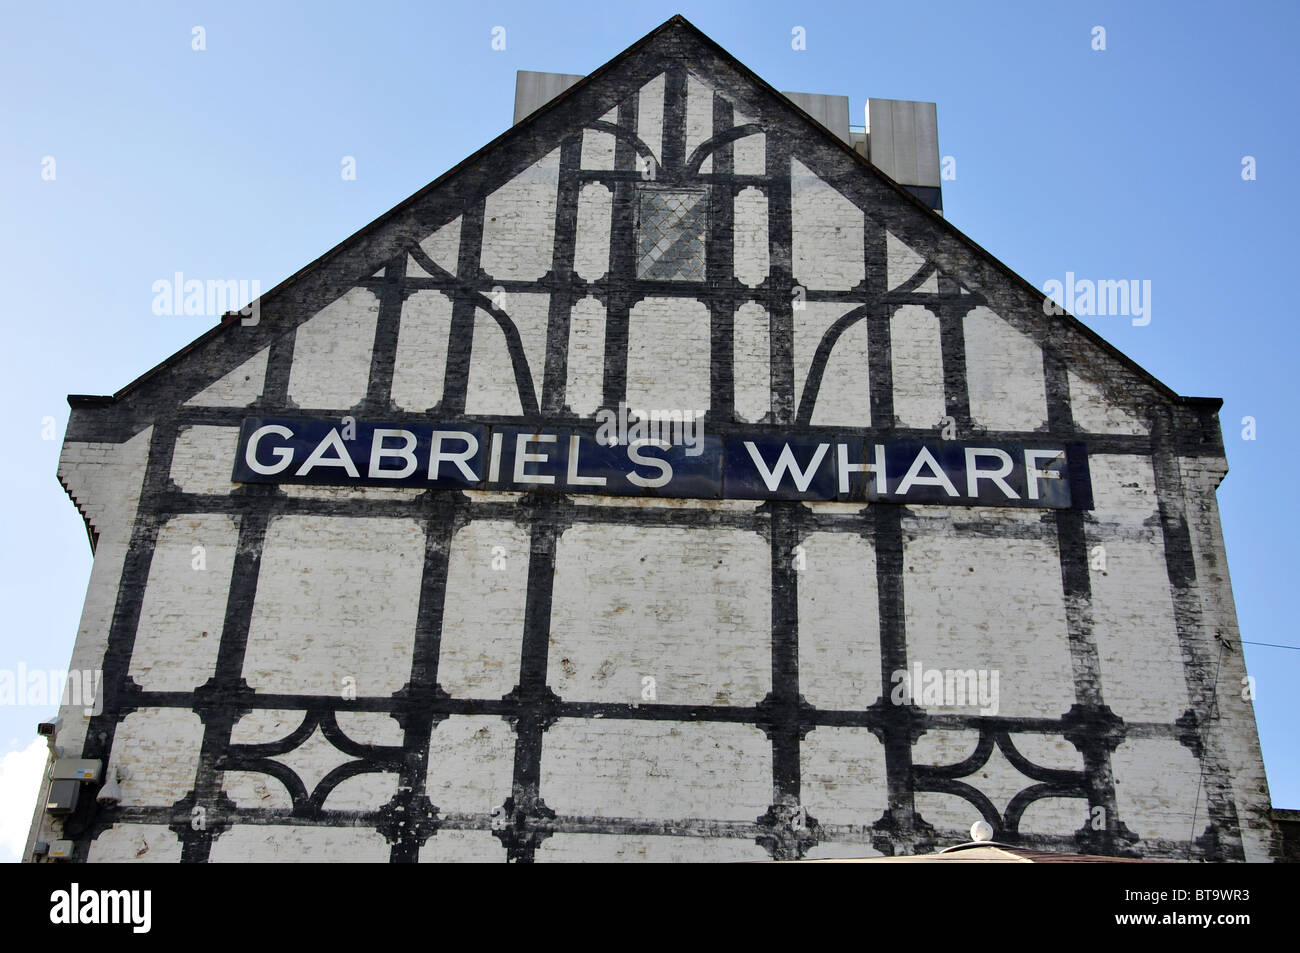 Gabriel's Wharf, South Bank, The London Borough of Lambeth, Greater London, England, United Kingdom Stock Photo